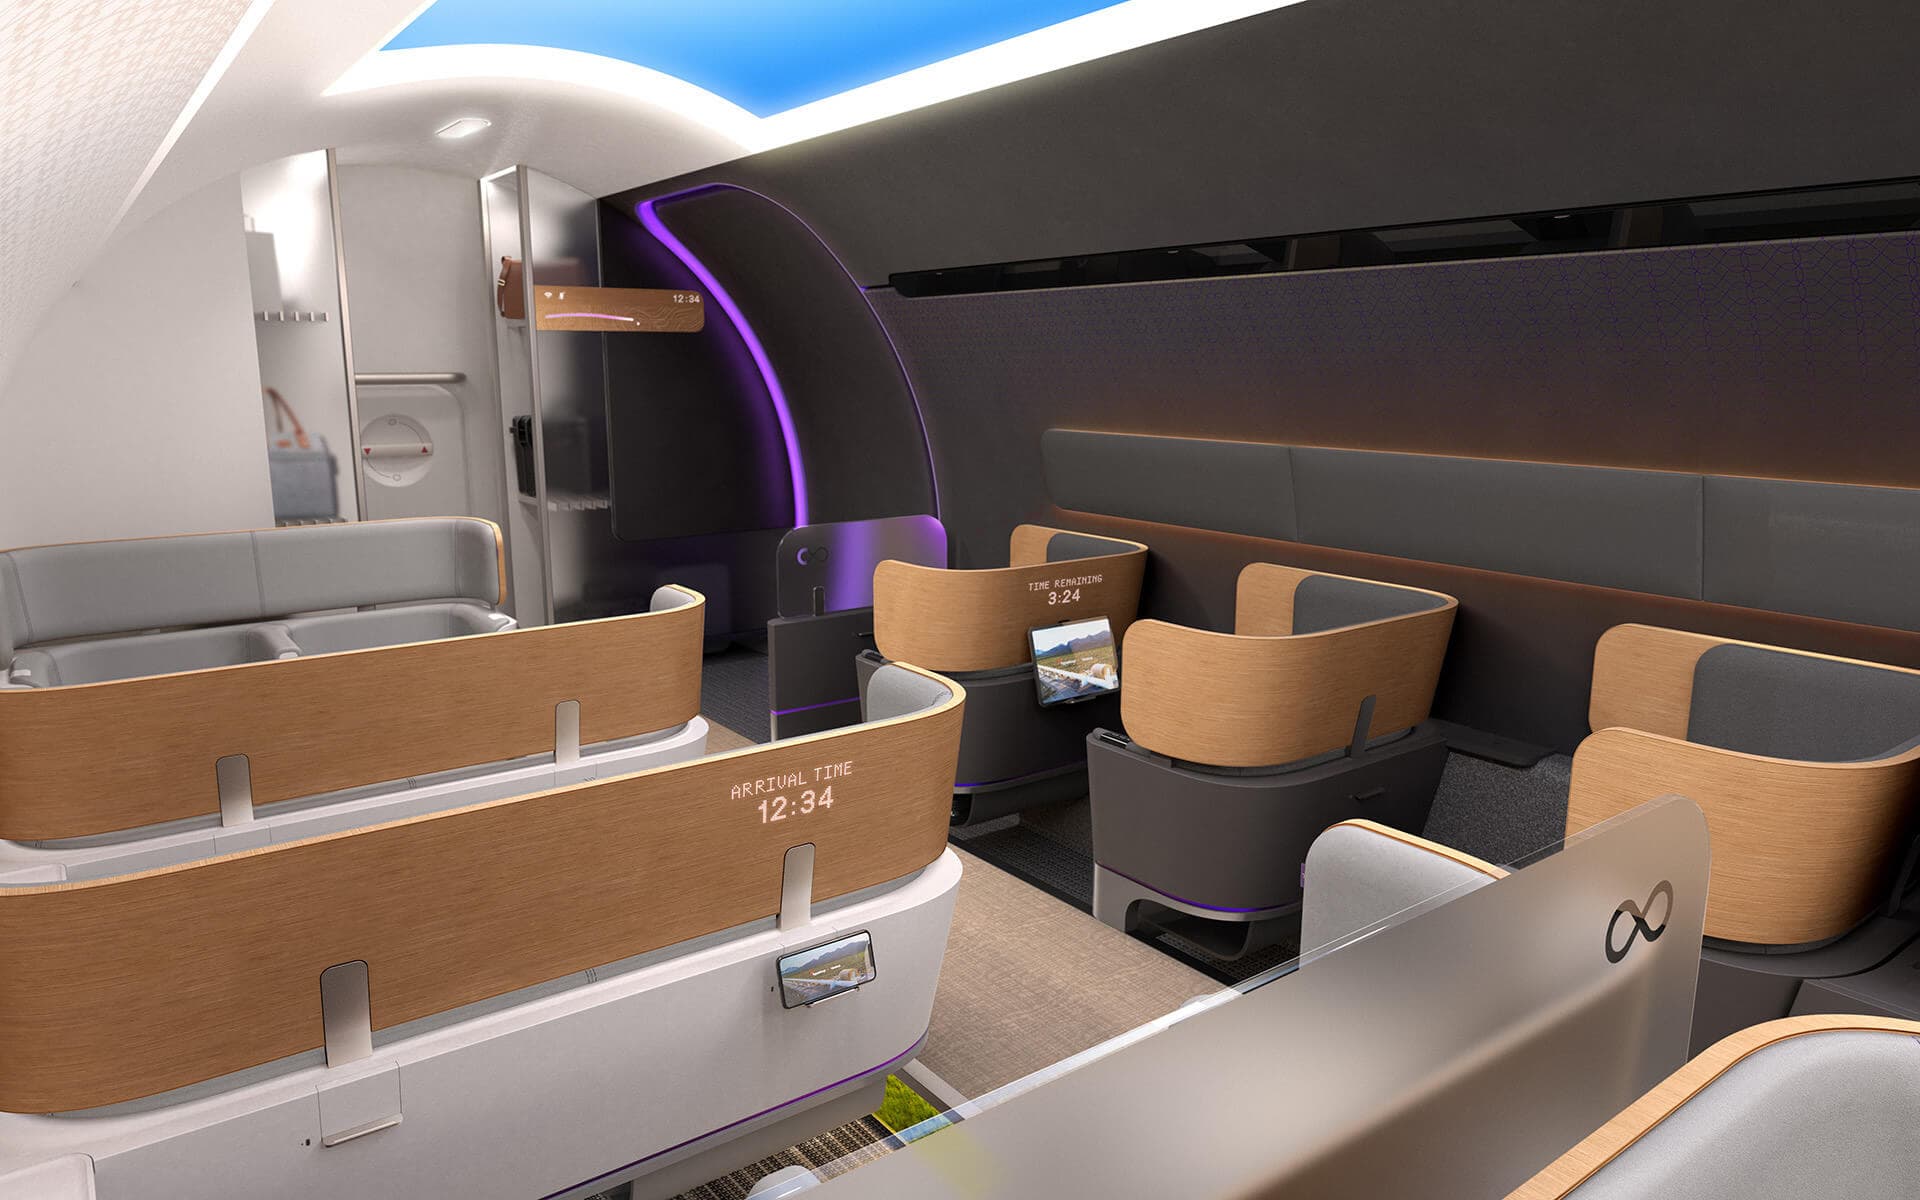 Virgin Hyperloop passenger pod interior design with skylight